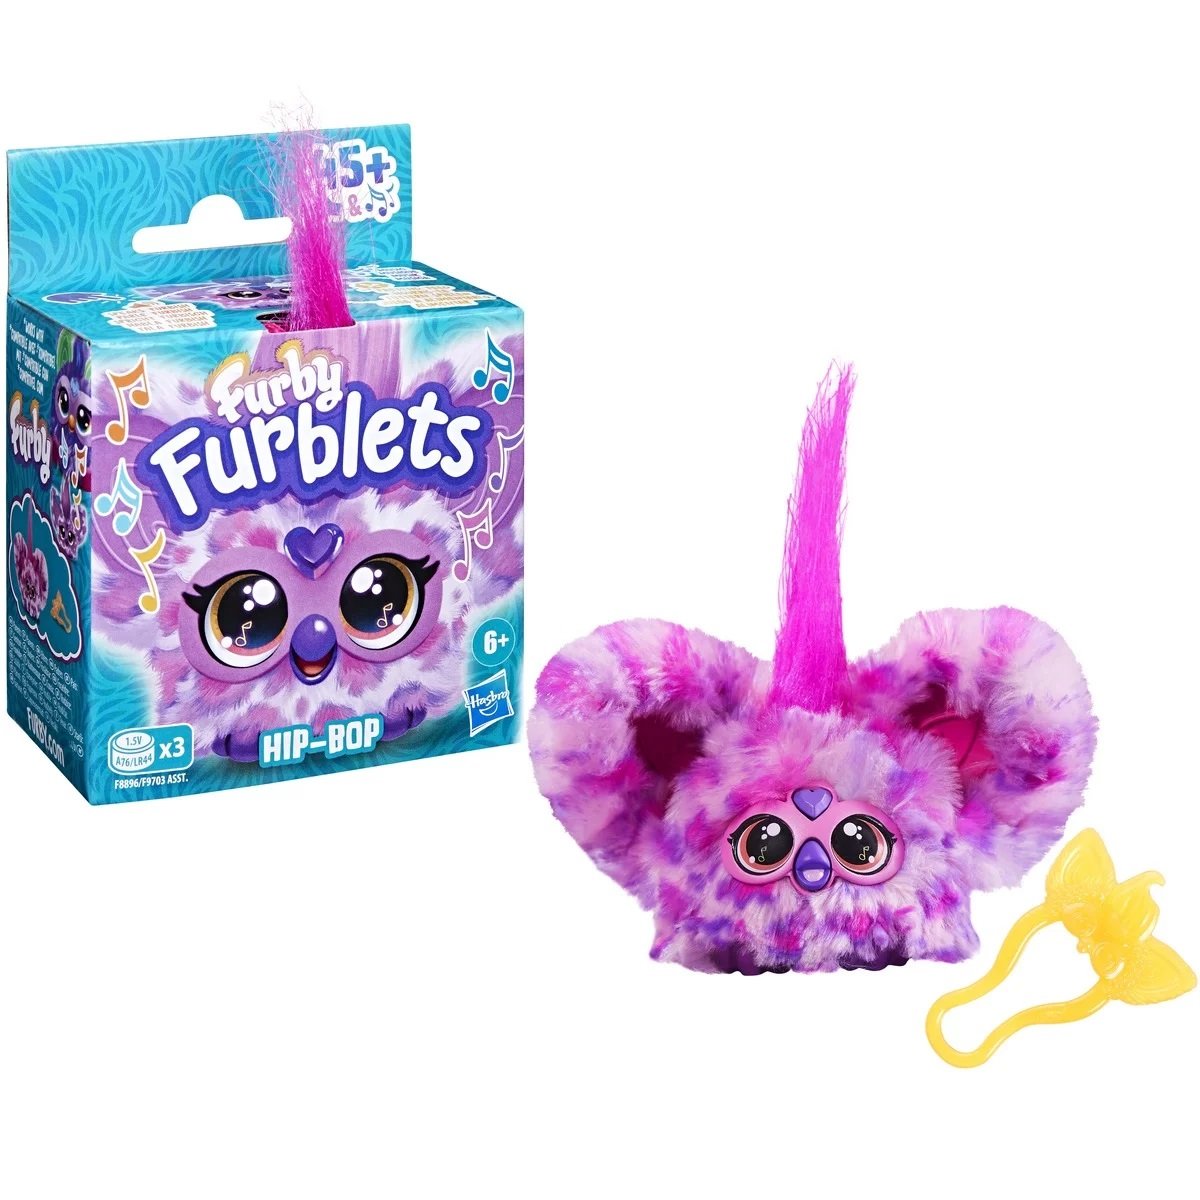 Jucarie de plus interactiva, Furby Furblets, Hip-Bop, 5 cm